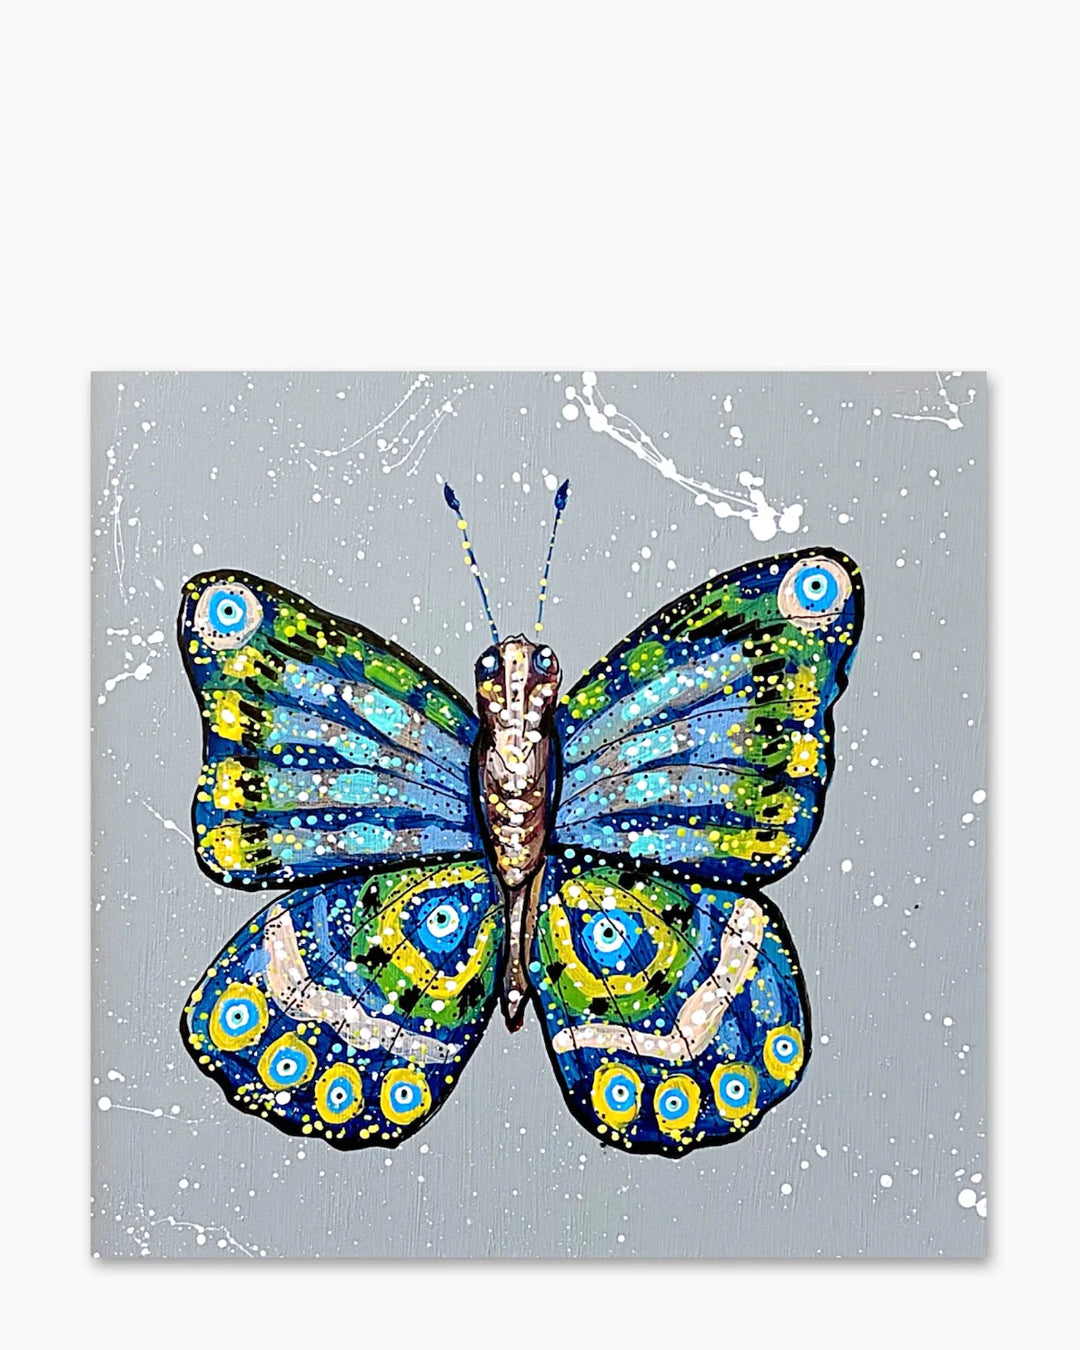 The Butterfly’s Evil Eyes - Heather Freitas 